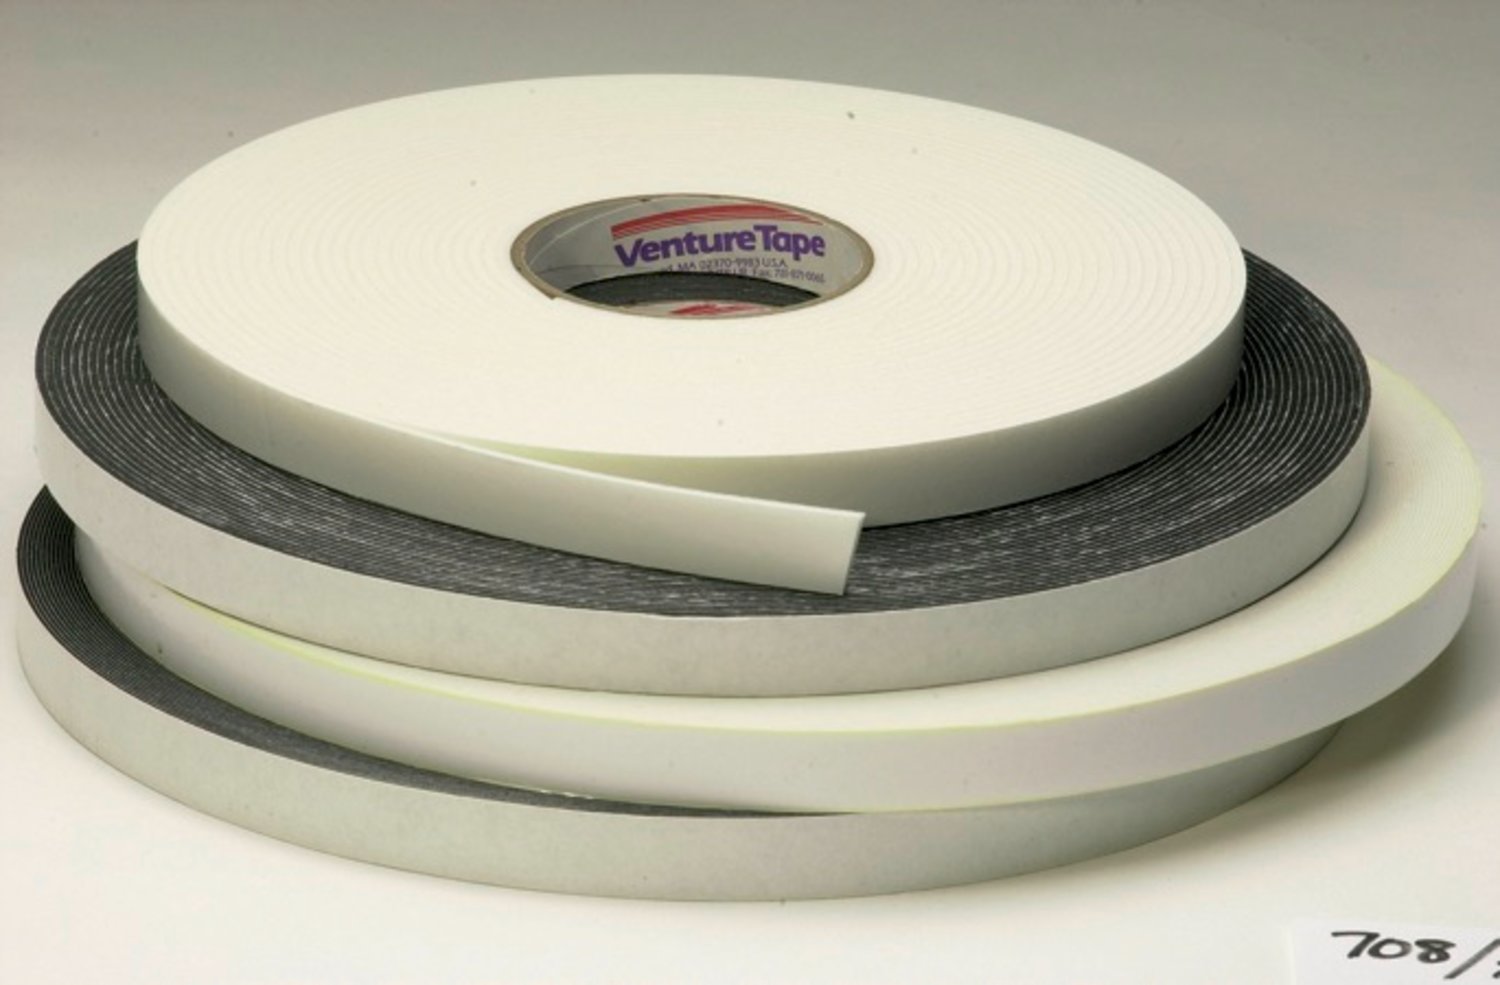 7100043880 - 3M Venture Tape Double Sided Polyethylene Foam Glazing Tape VG716,
White, 3/8 in x 150 ft, 62 mil, 53 rolls per case